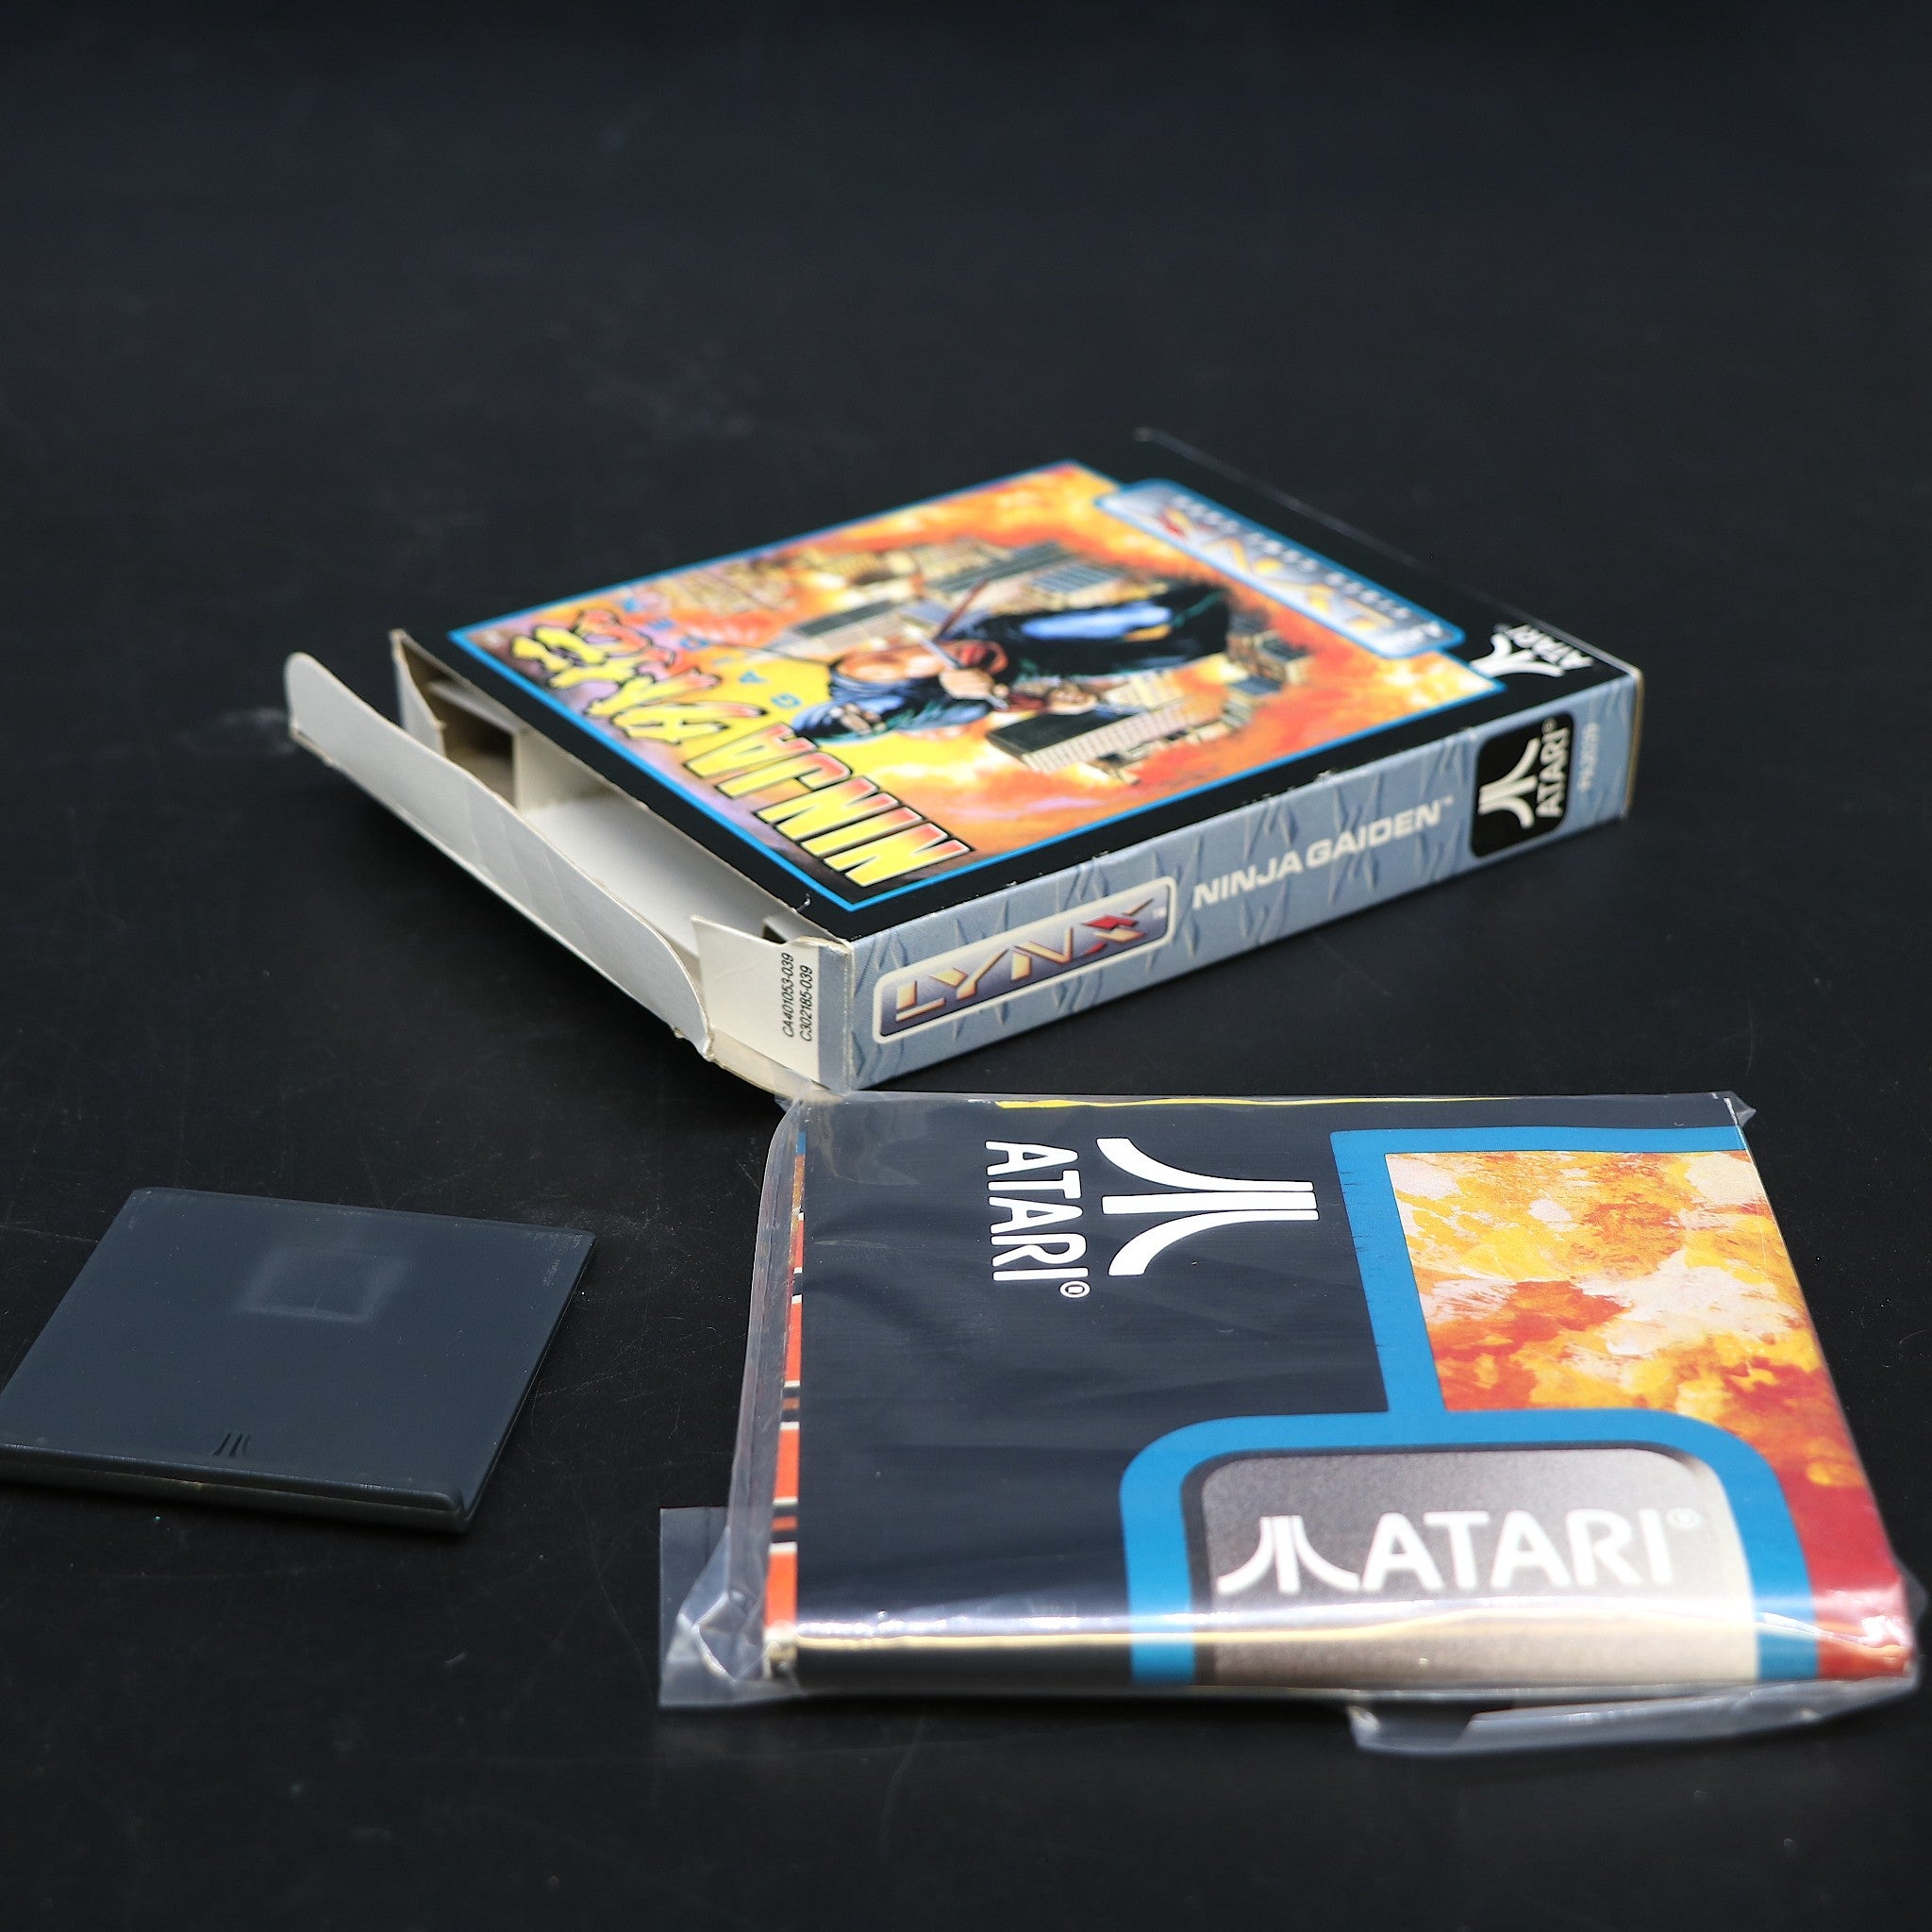 Ninja Gaiden | Atari Lynx Game | Complete CIB | Collectable Condition